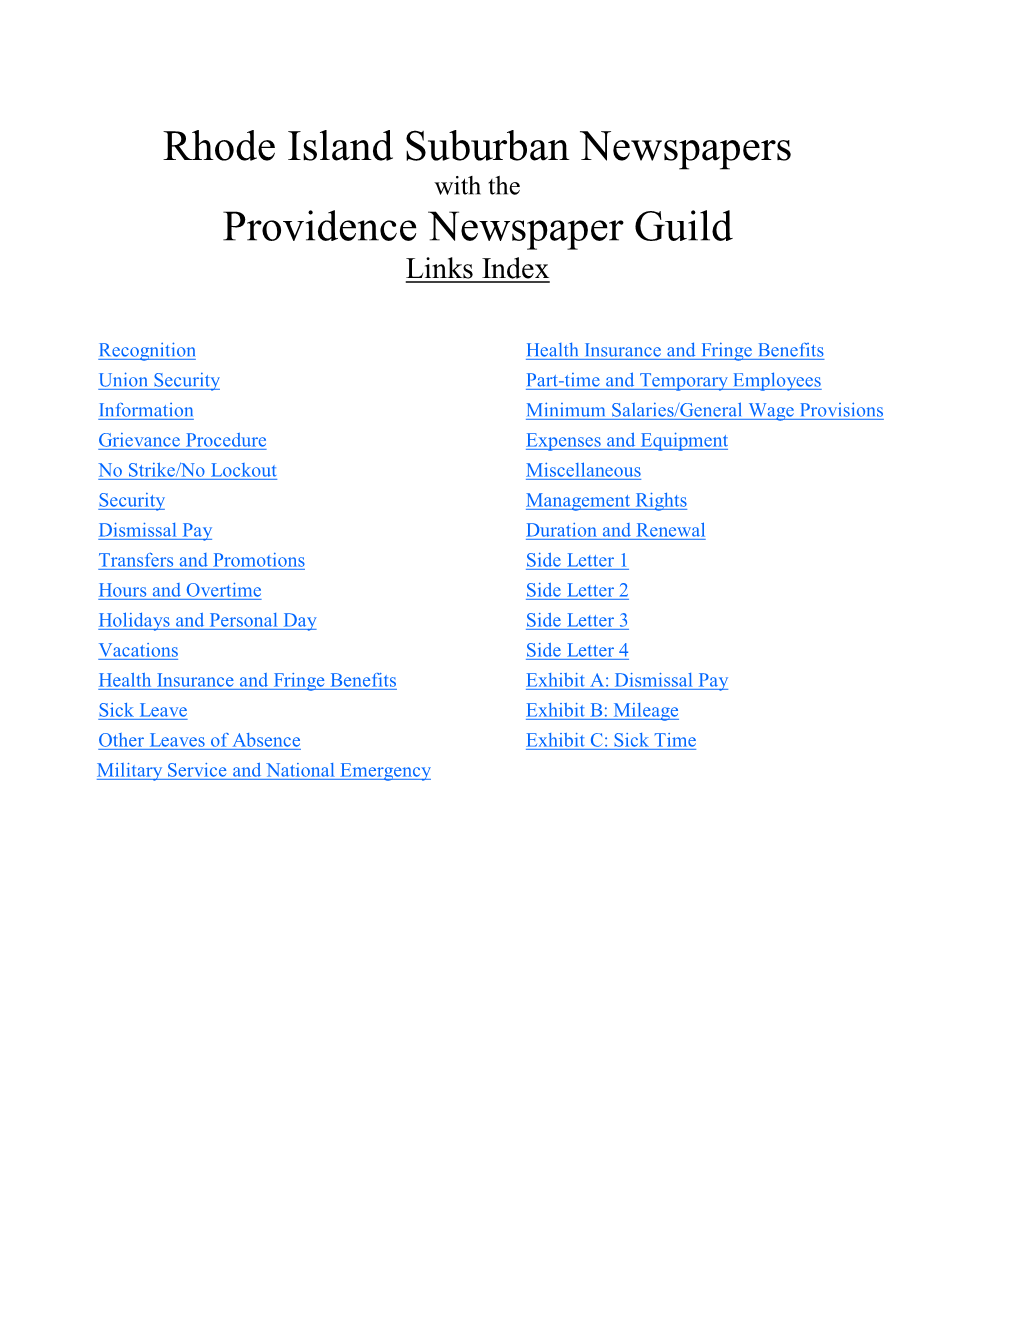 Rhode Island Suburban Newspapers Providence Newspaper Guild